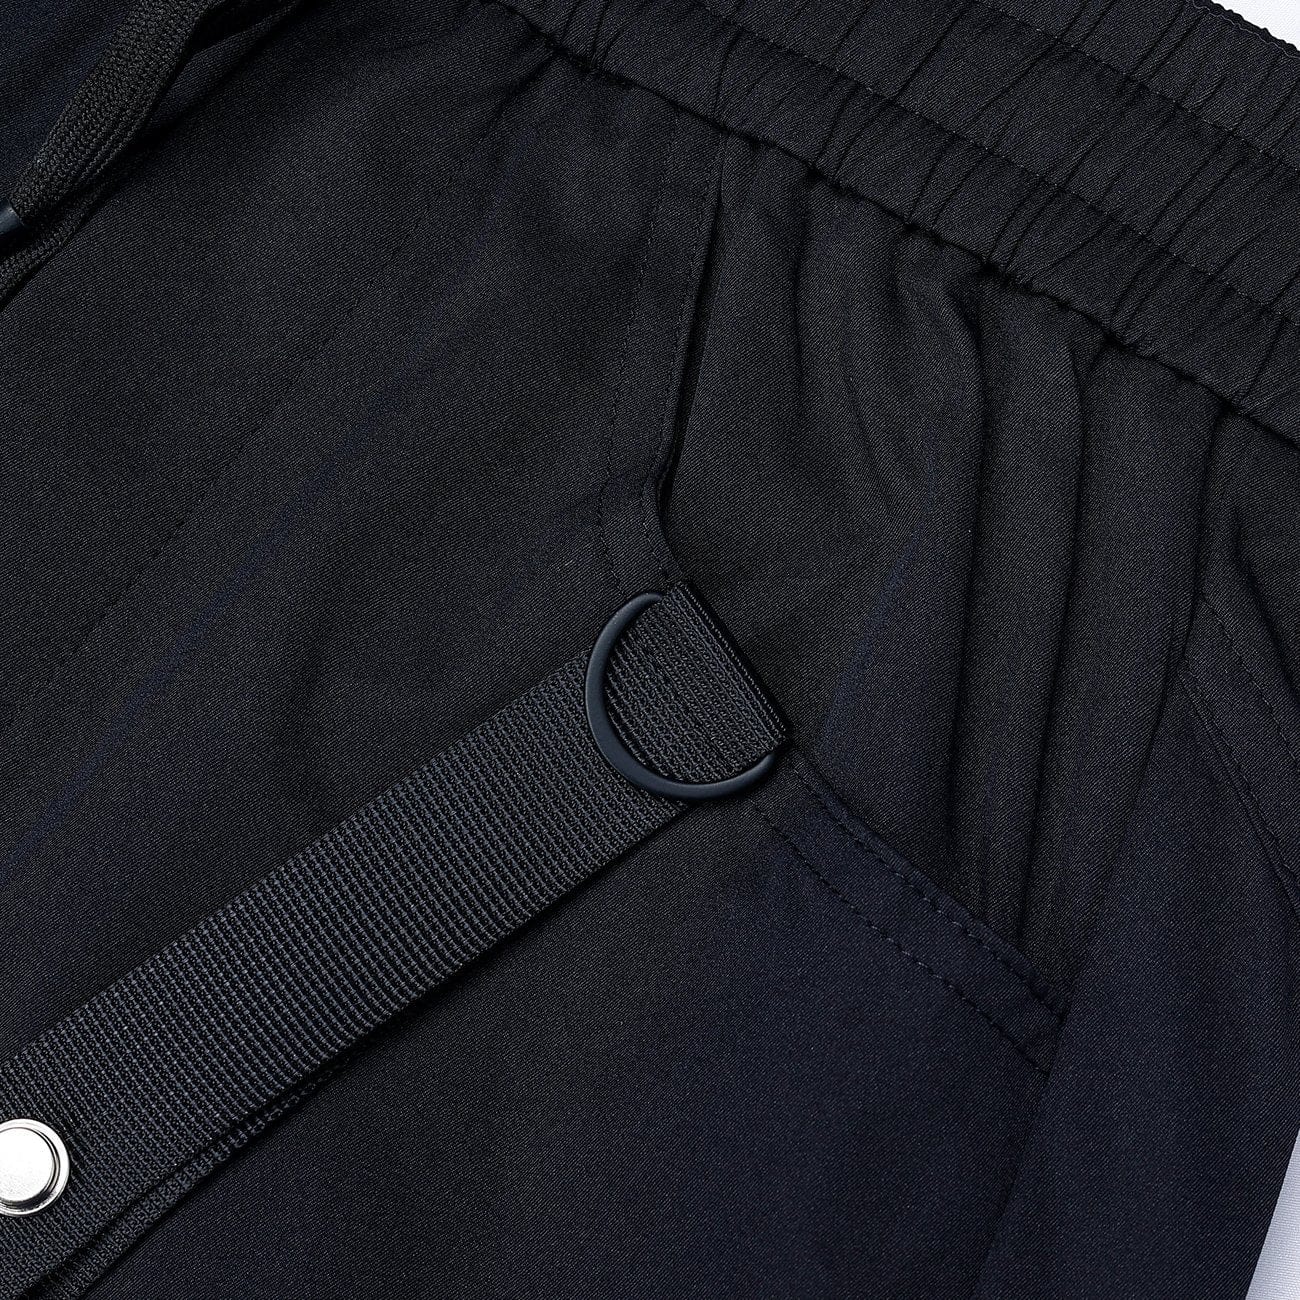 Multi Pockets Ribbon Shorts Streetwear Brand Techwear Combat Tactical YUGEN THEORY